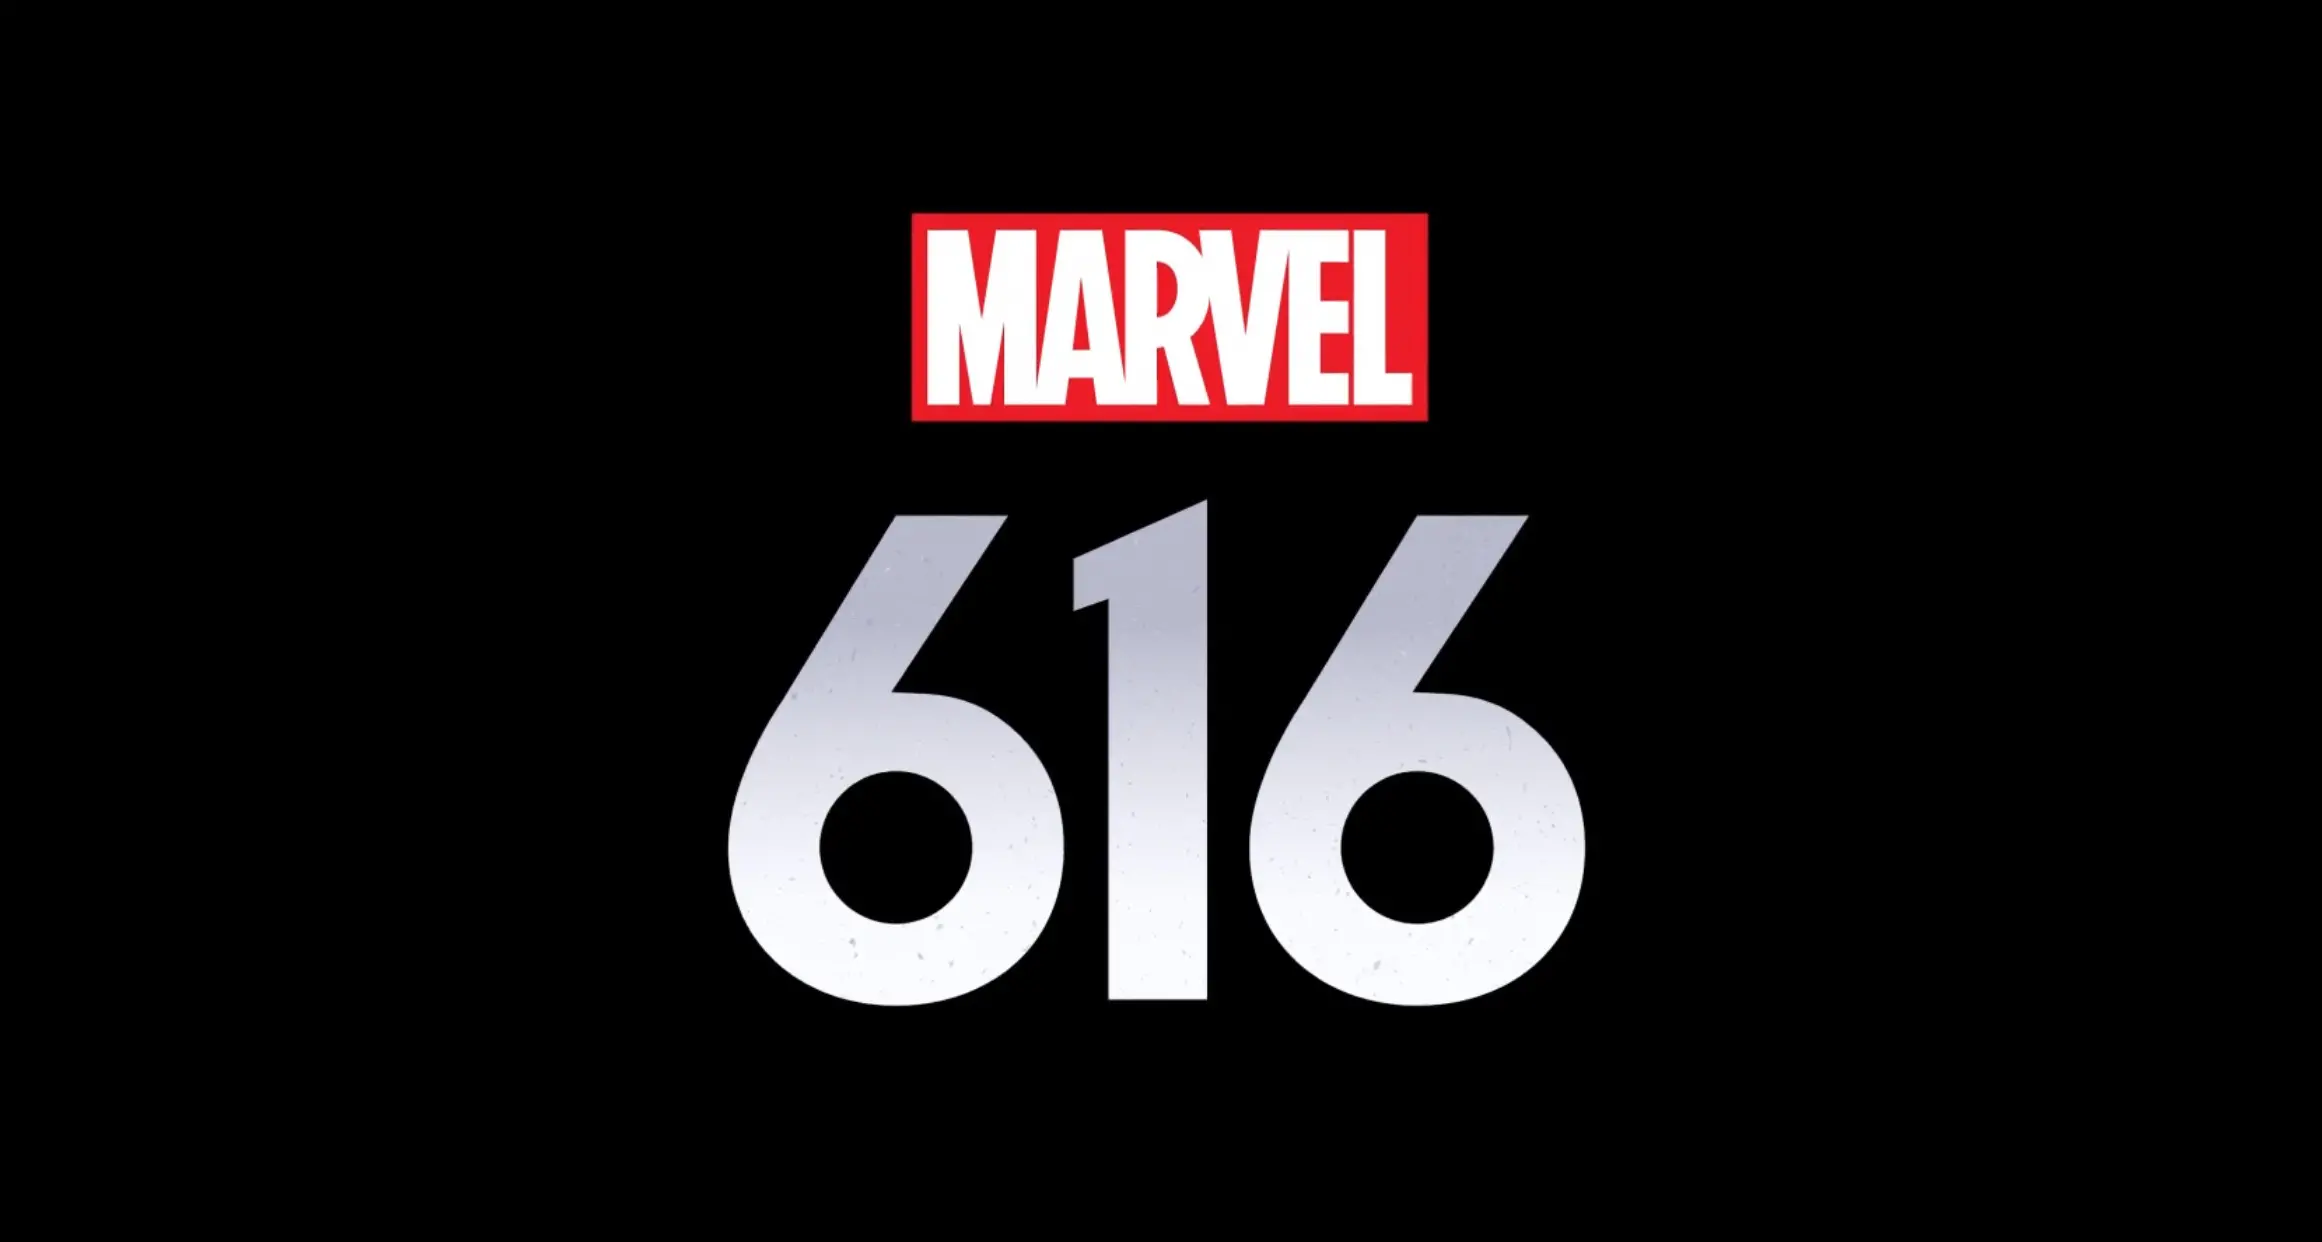 Marvel 616 su Disney+